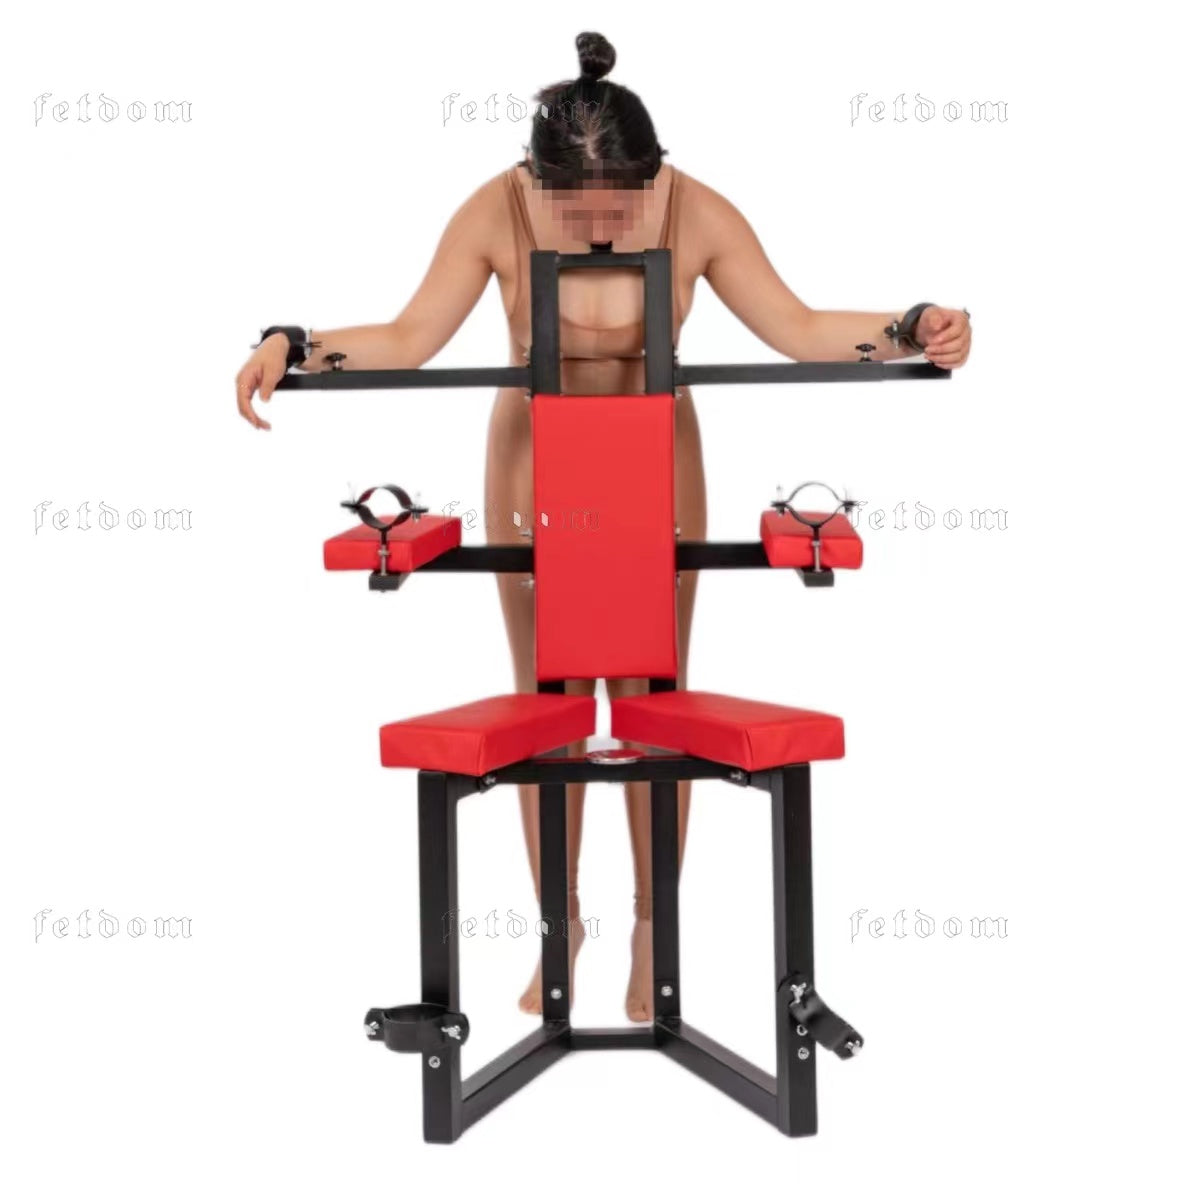 The Bondage chair, Dom Throne, Slave's Seat- Multi Functional Bondage Restraint Chair